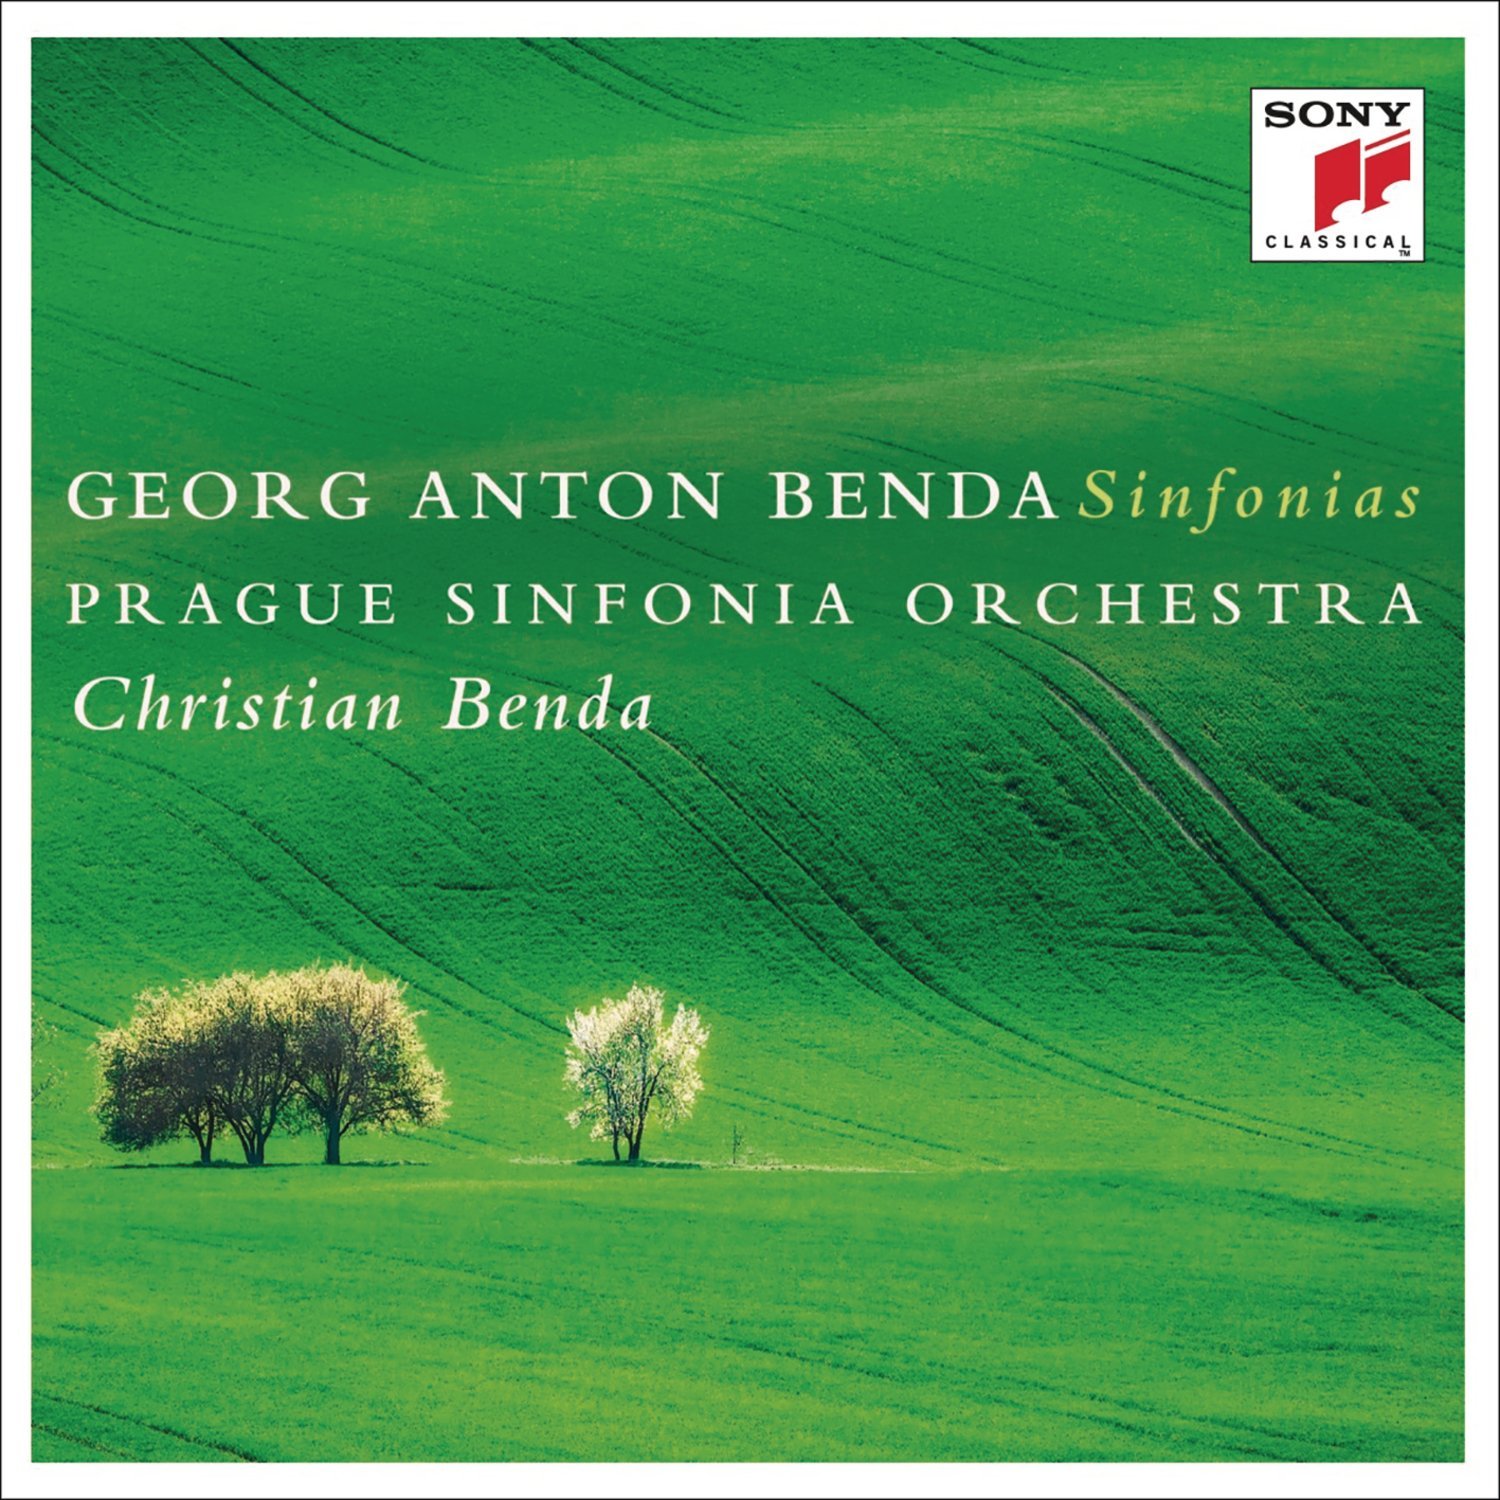 Georg Anton Benda: Sinfonias | Christian Benda, Georg Anton Benda